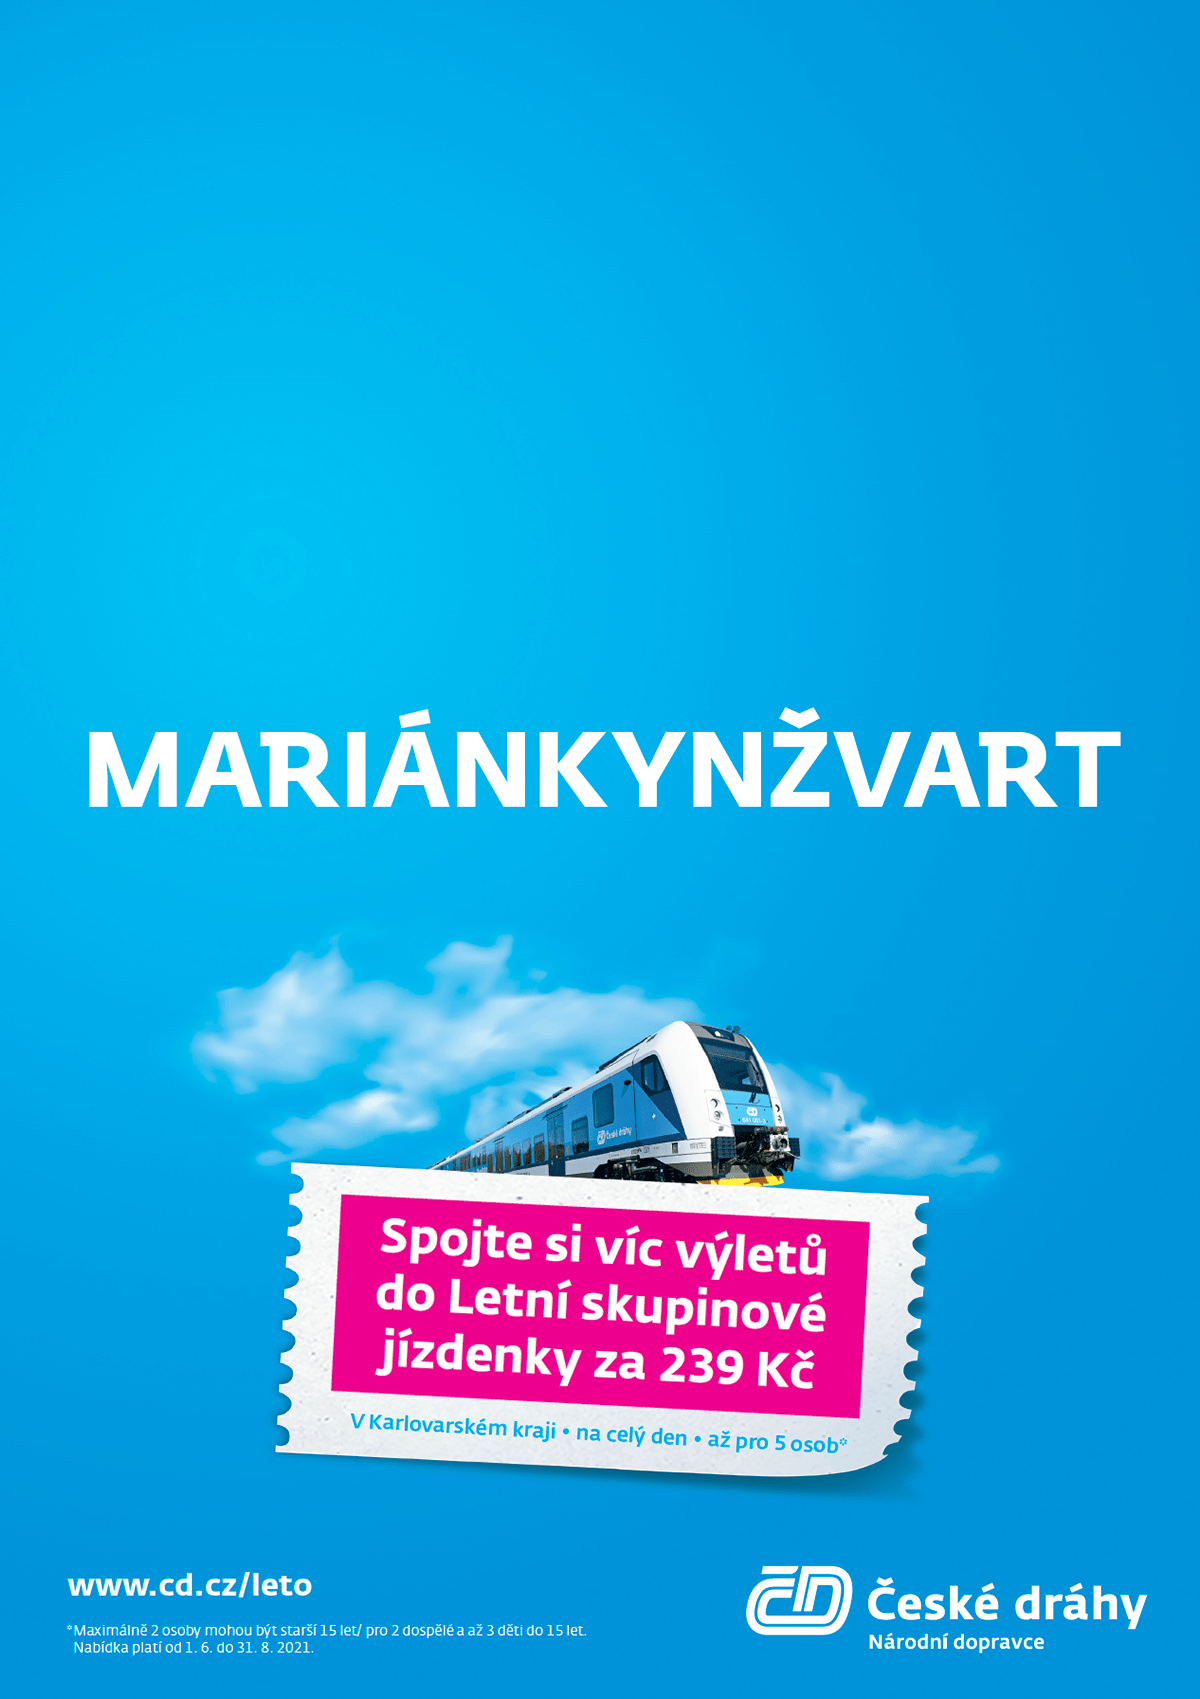 Advertising  Czech railways print